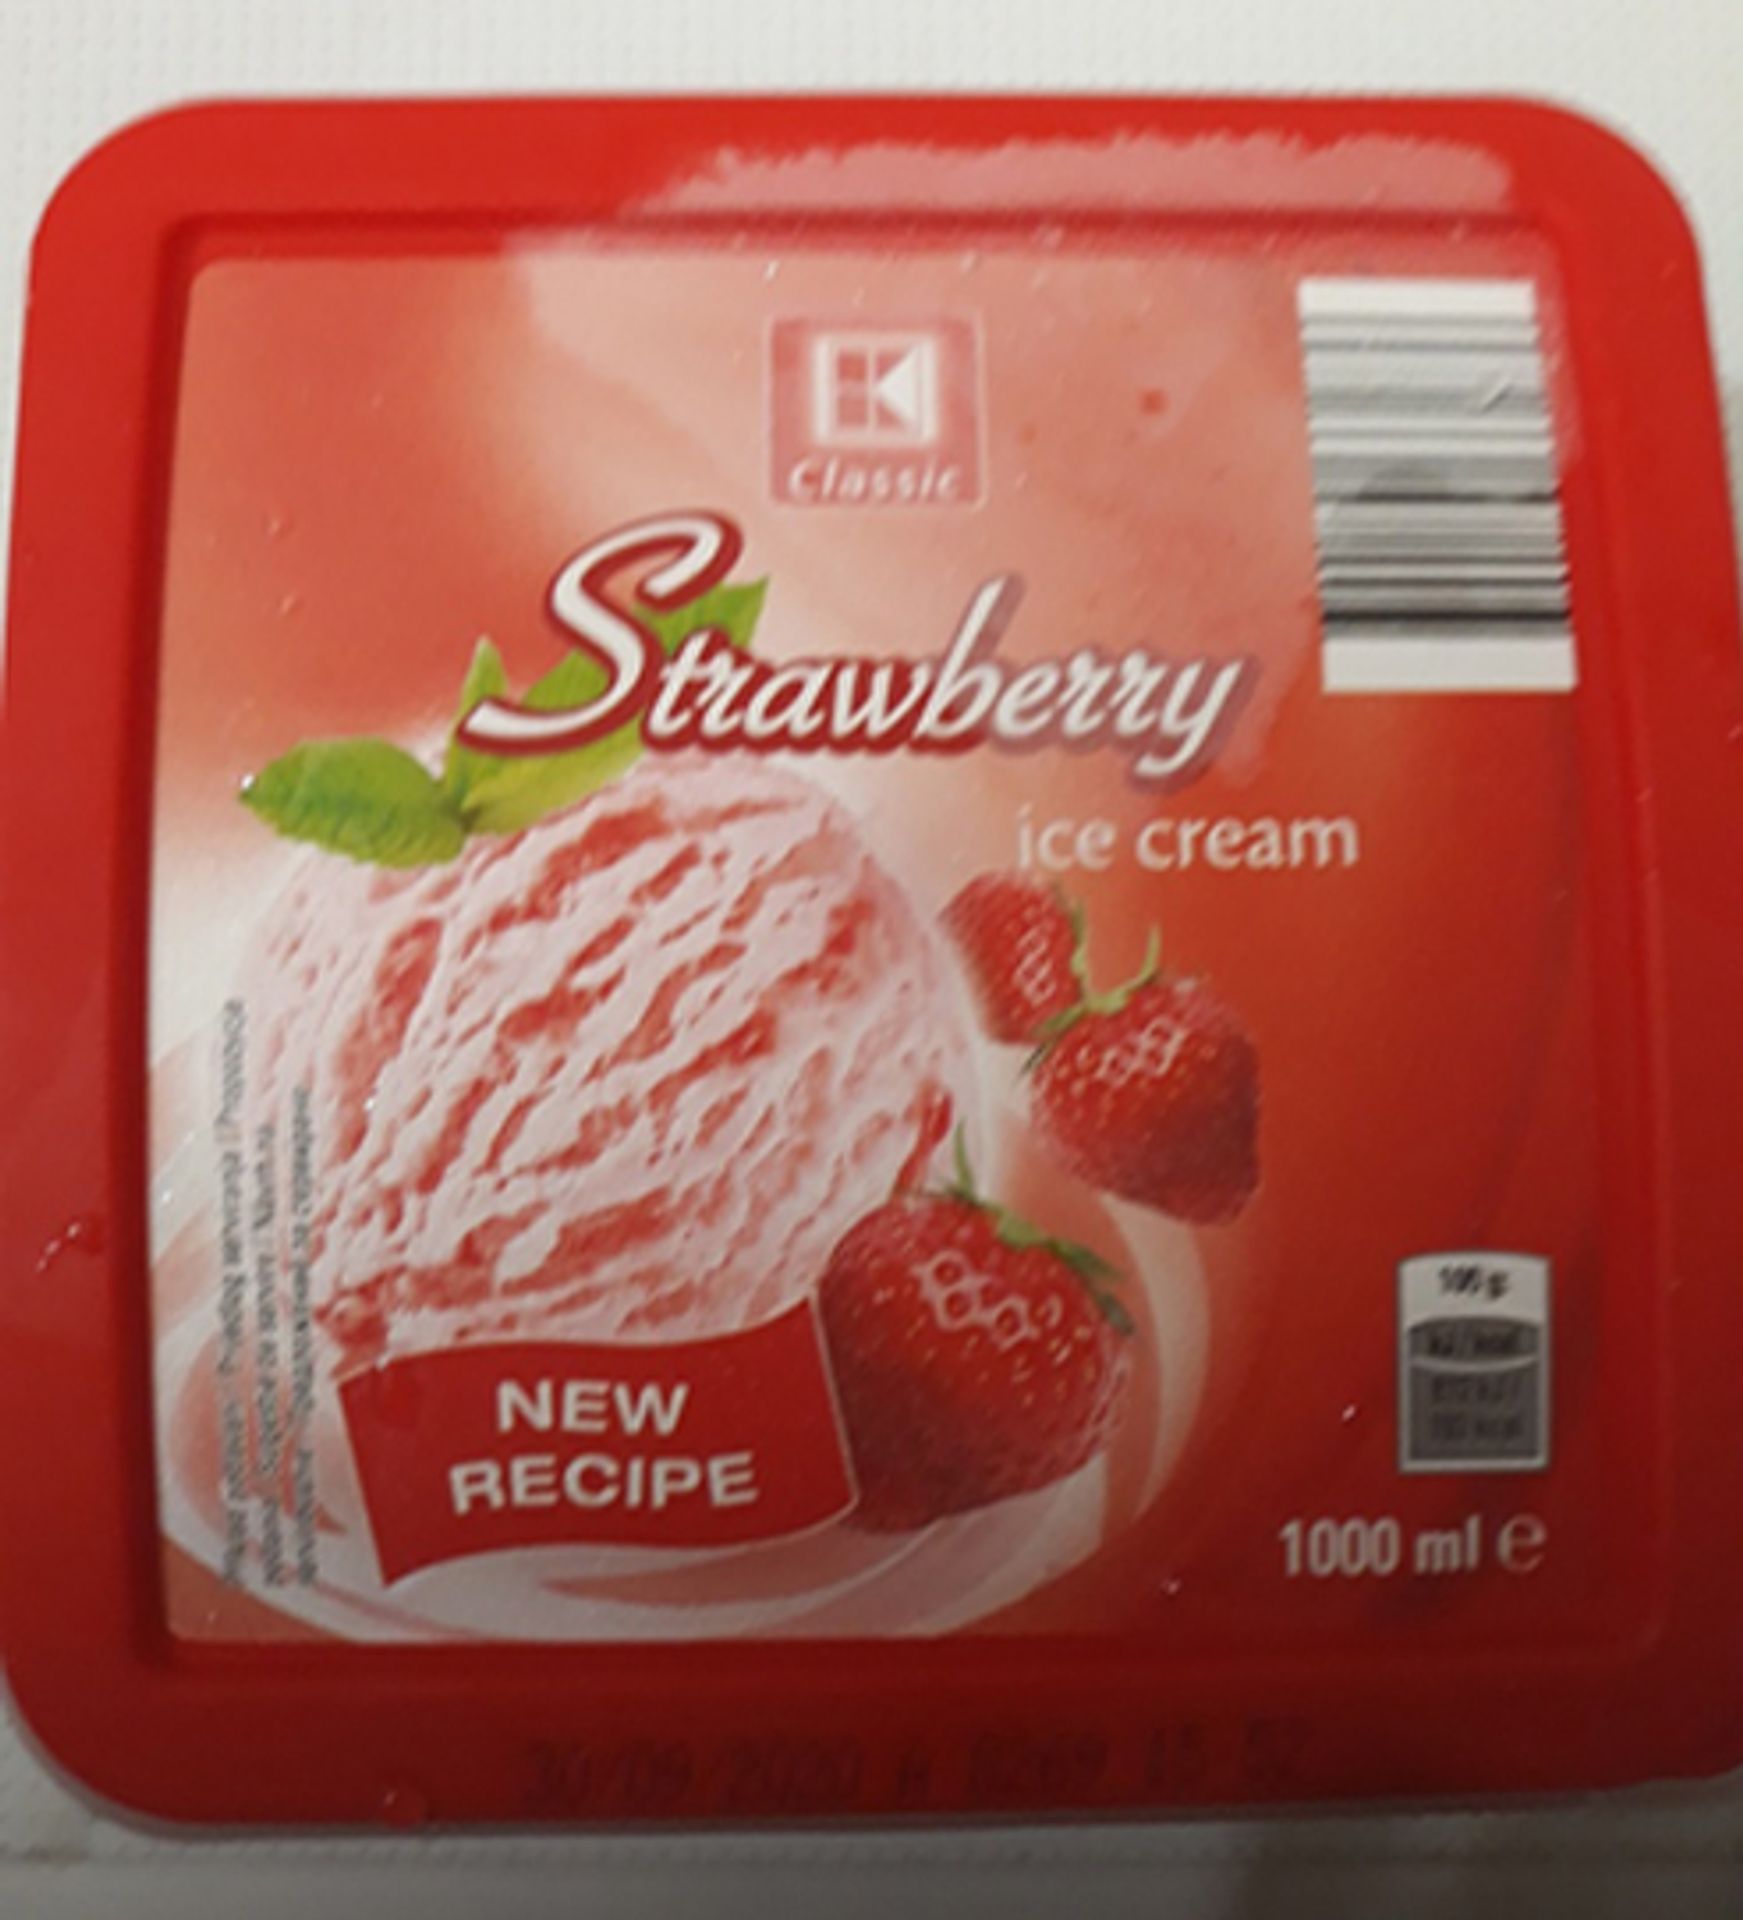 Testované zmrzliny - 5 - GALERIE: Testované zmrzliny (6/25)